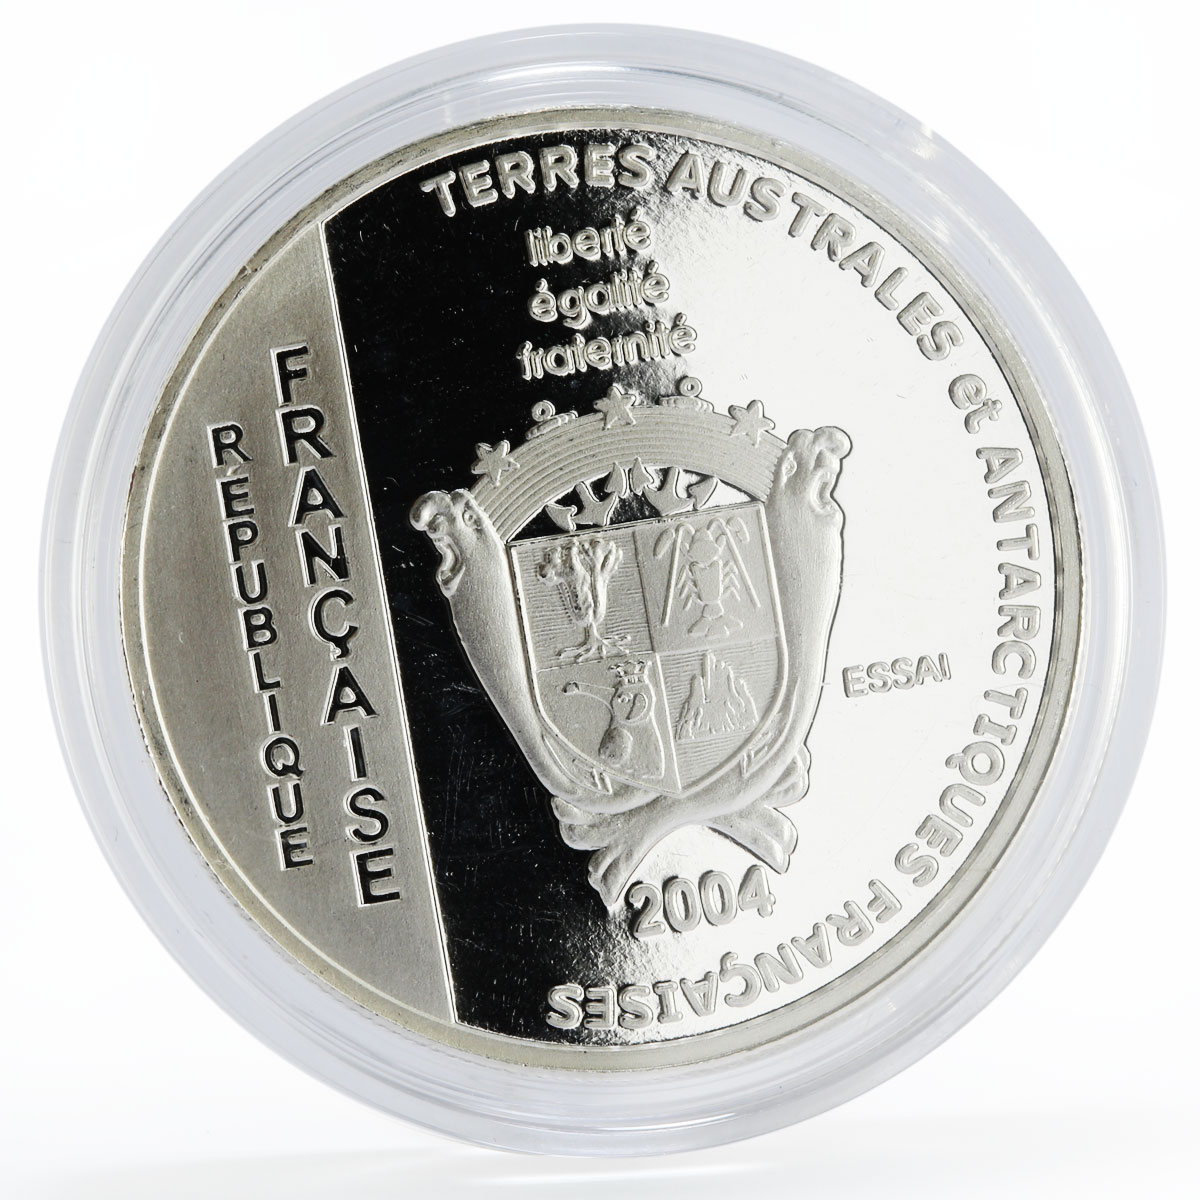 France 1 1/2 euro Corvette Astrolabe Ship Clipper proof silver coin 2004